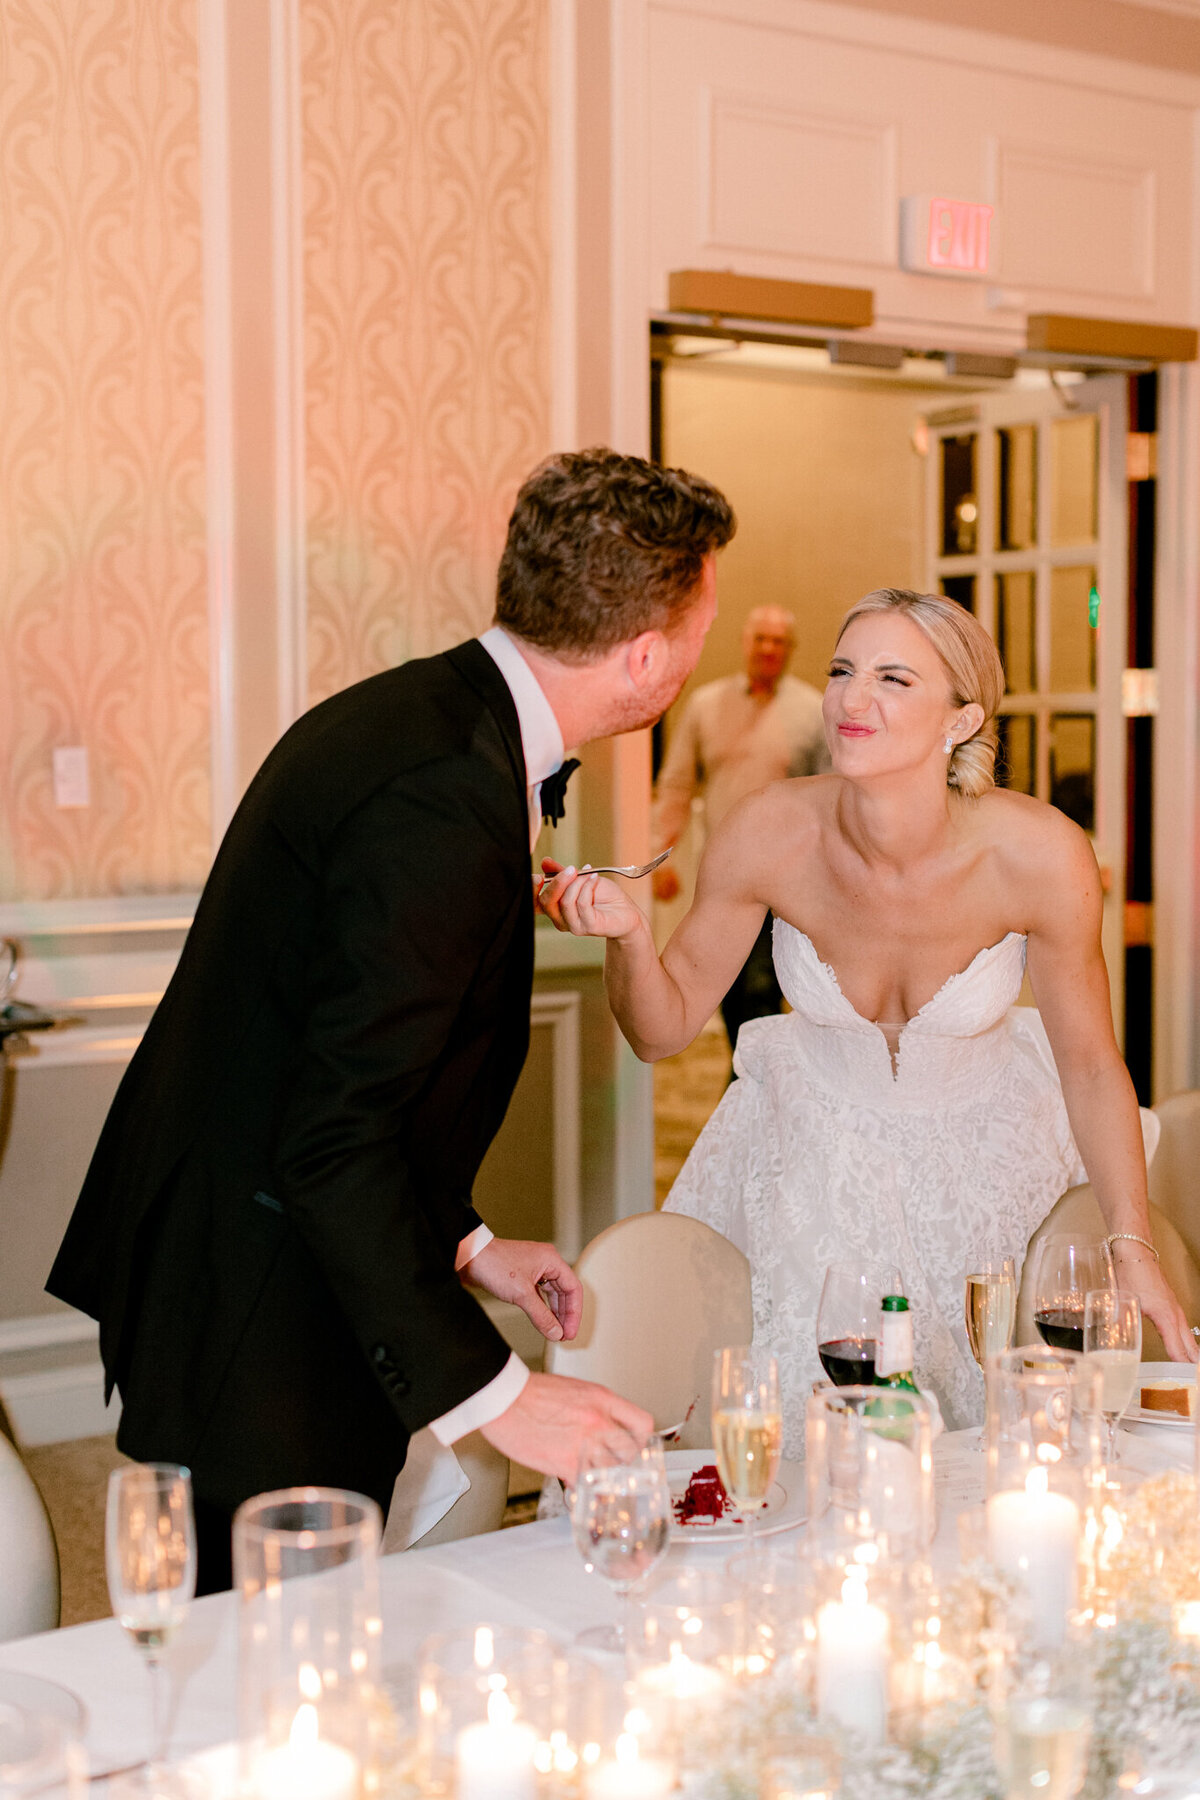 Katelyn & Kyle's Wedding at the Adolphus Hotel | Dallas Wedding Photographer | Sami Kathryn Photography-328